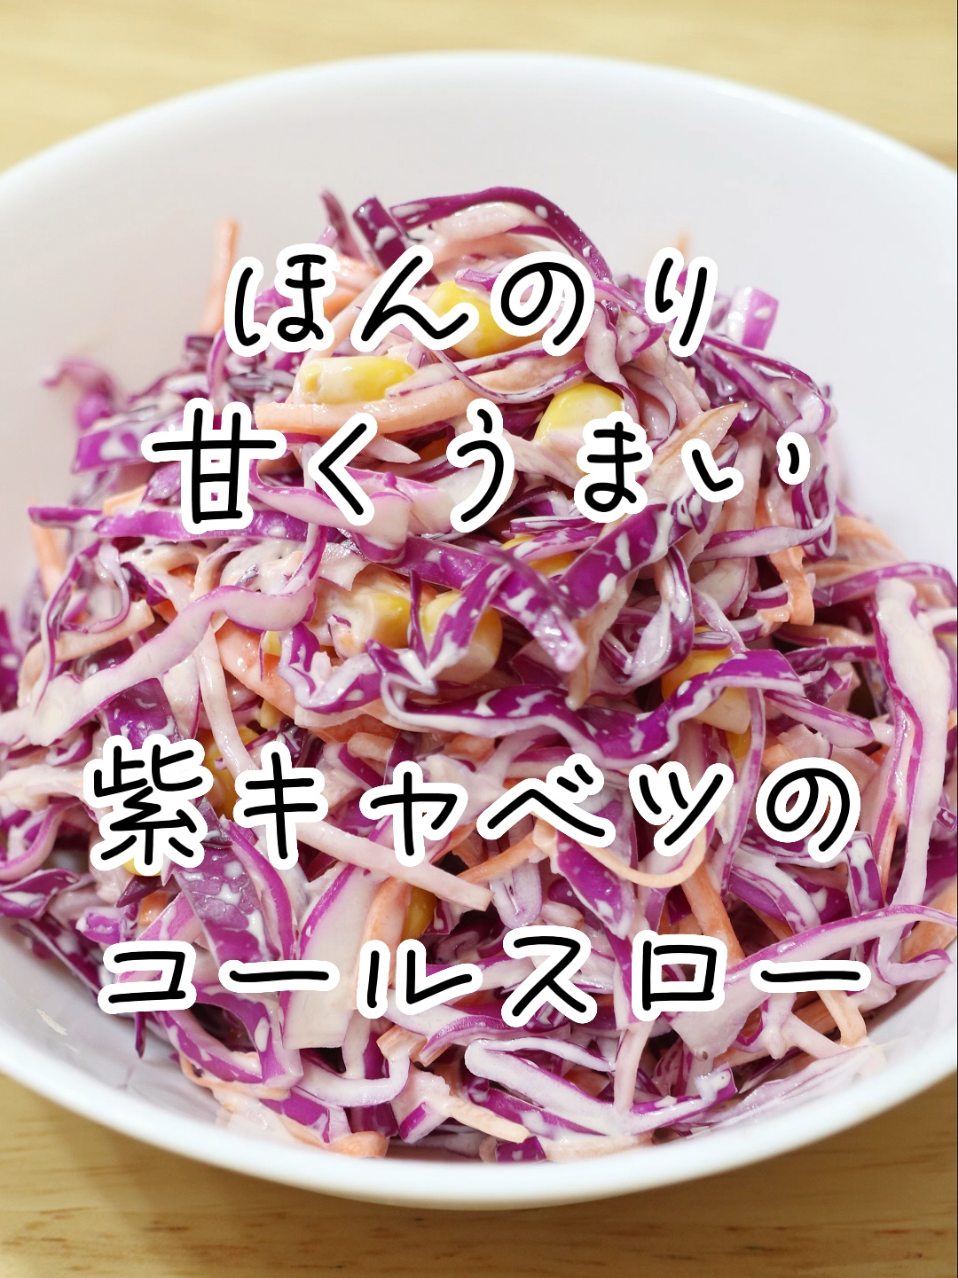 Purple Cabbage Citrus Coleslaw - Self Proclaimed Foodie